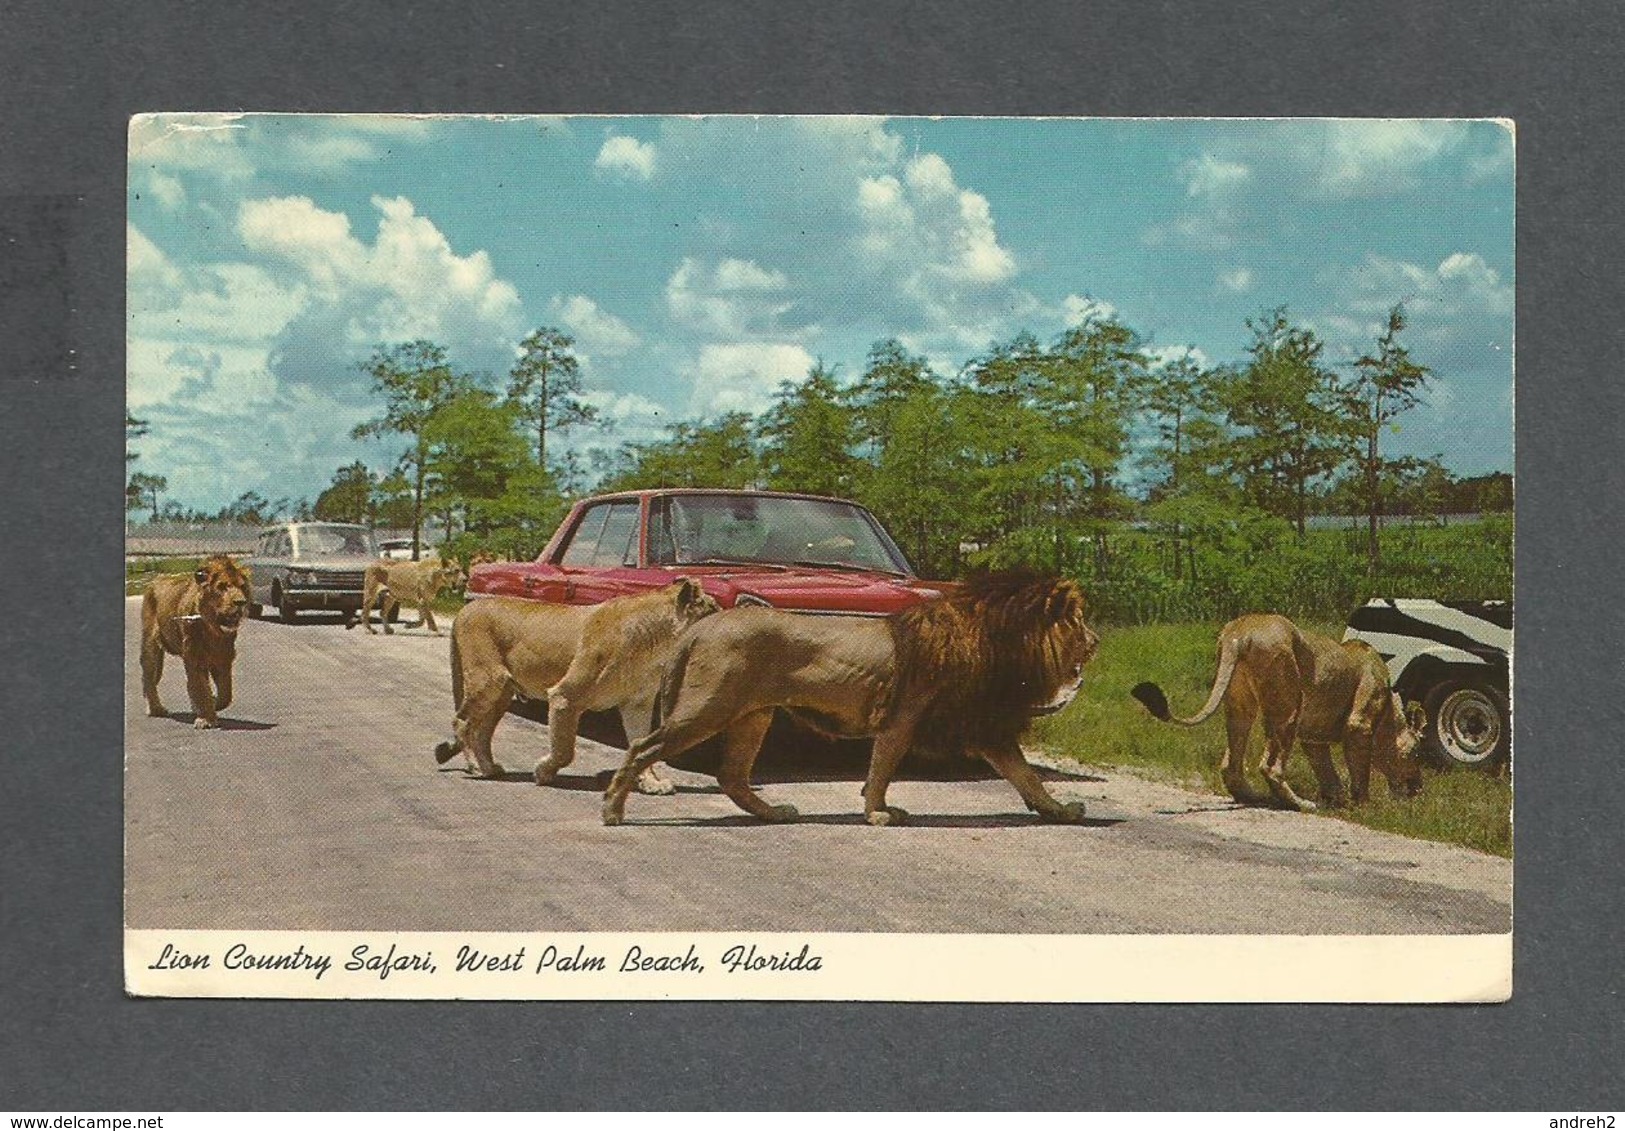 ANIMAUX - ANIMALS - LIONS - LION COUNTRY SAFARI WEST PALM BEACH FLORIDA - Lions